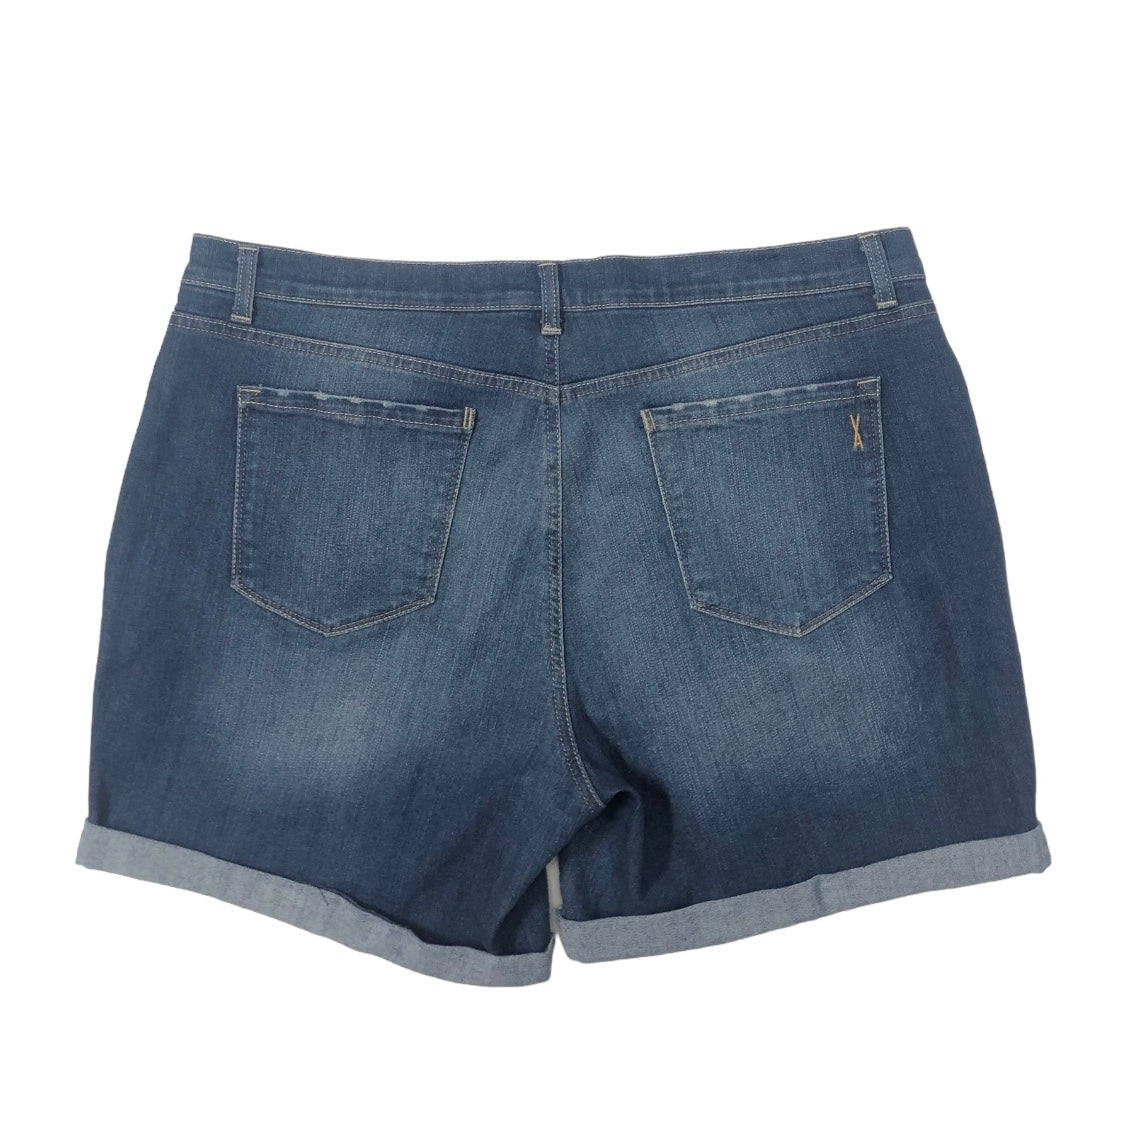 Blue Denim Shorts Vintage America, Size 14